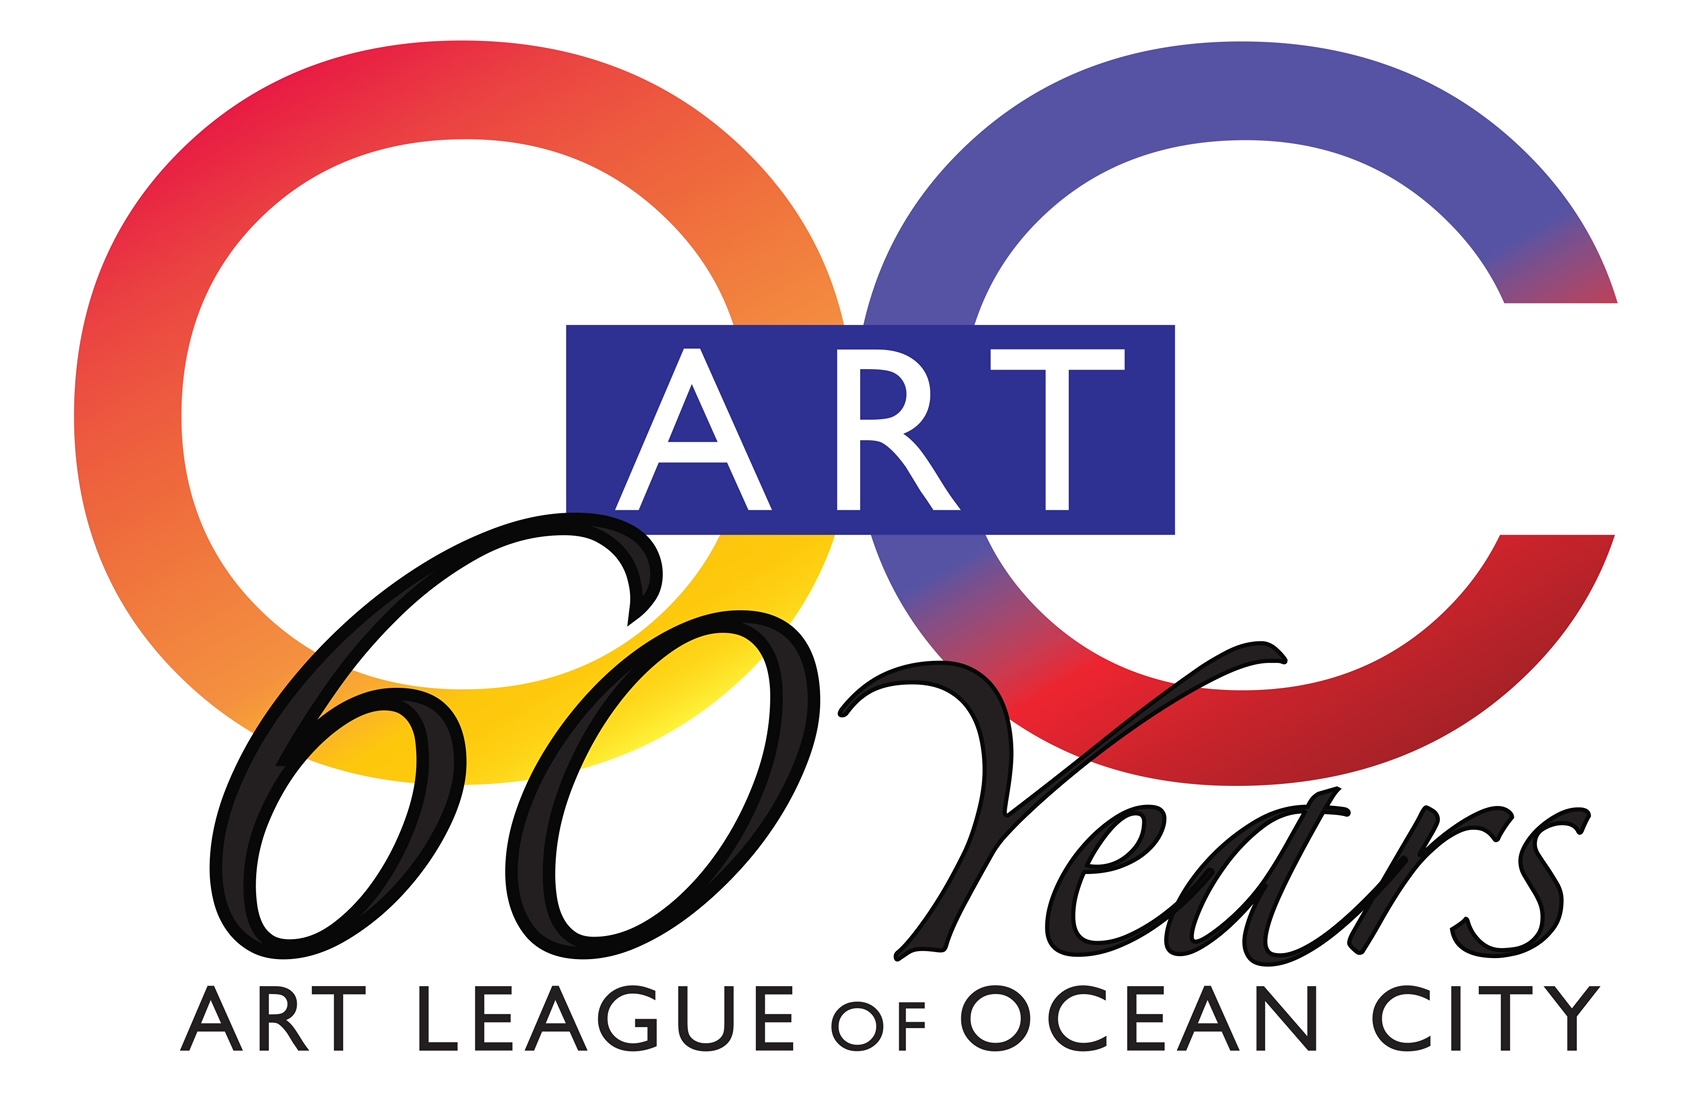 The Art League of Ocean City